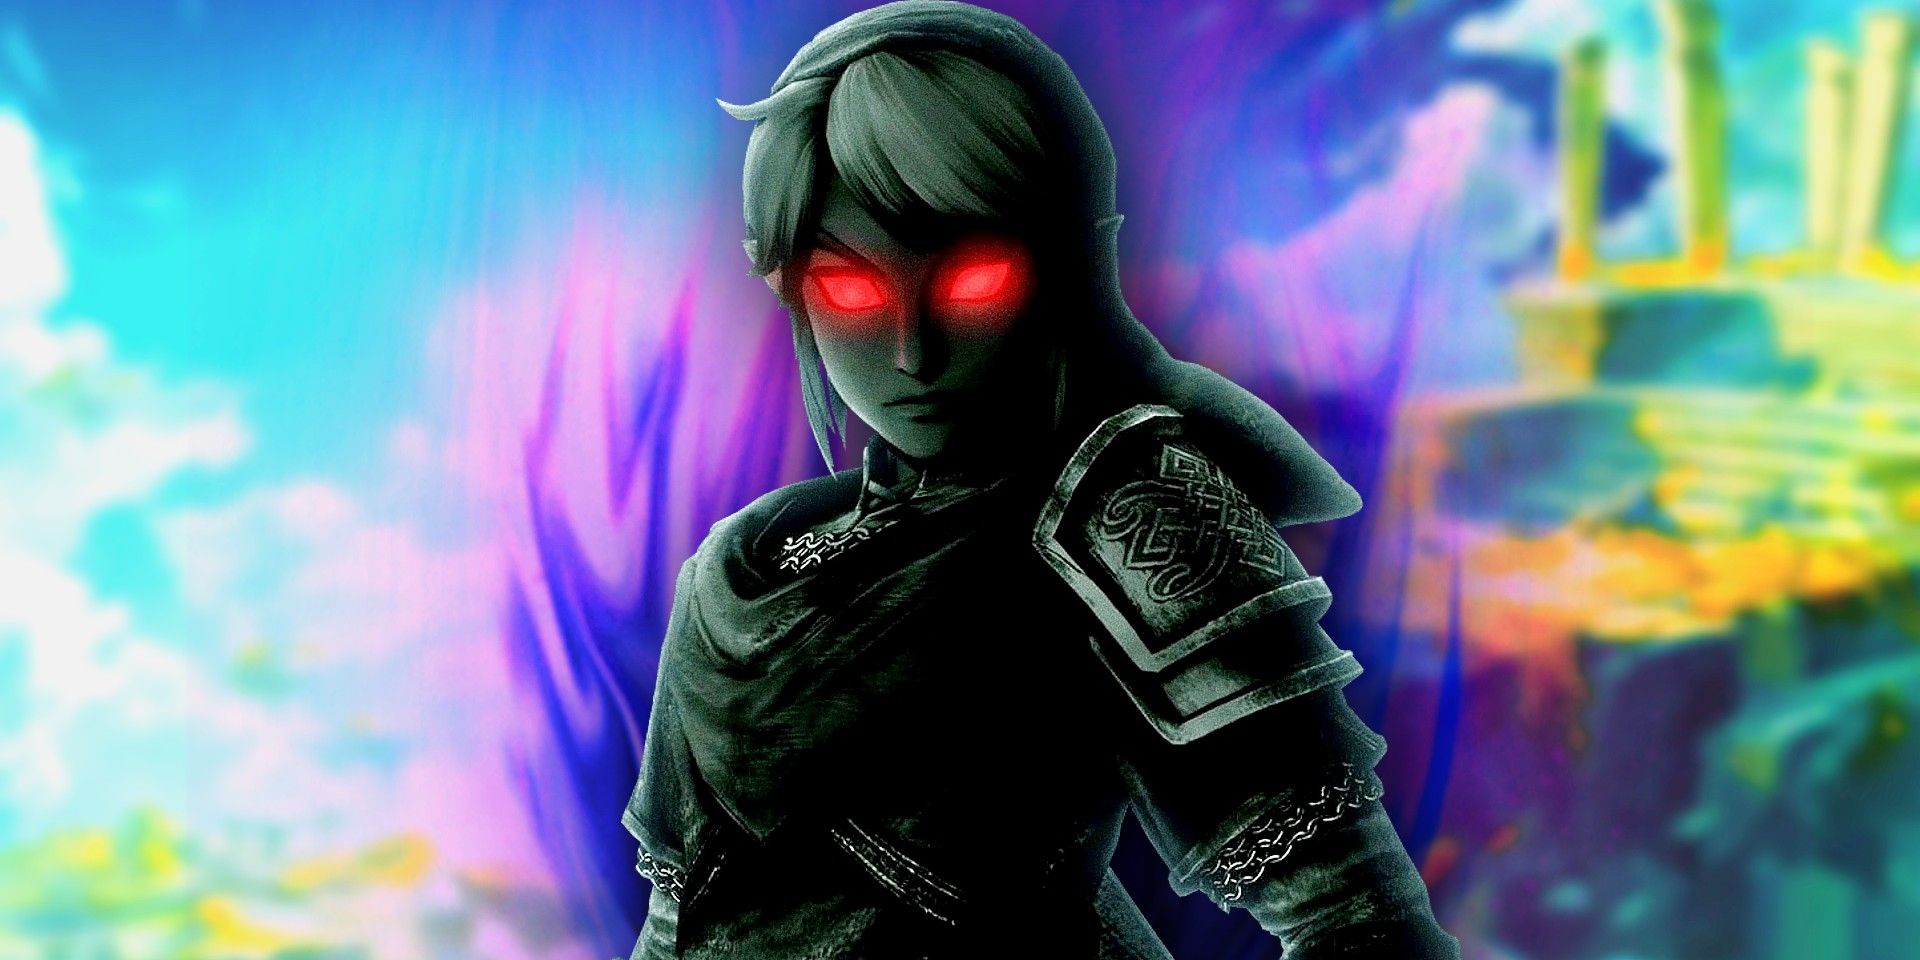 Zelda's Dark Link in TOTK with a dark purple flame behind him.